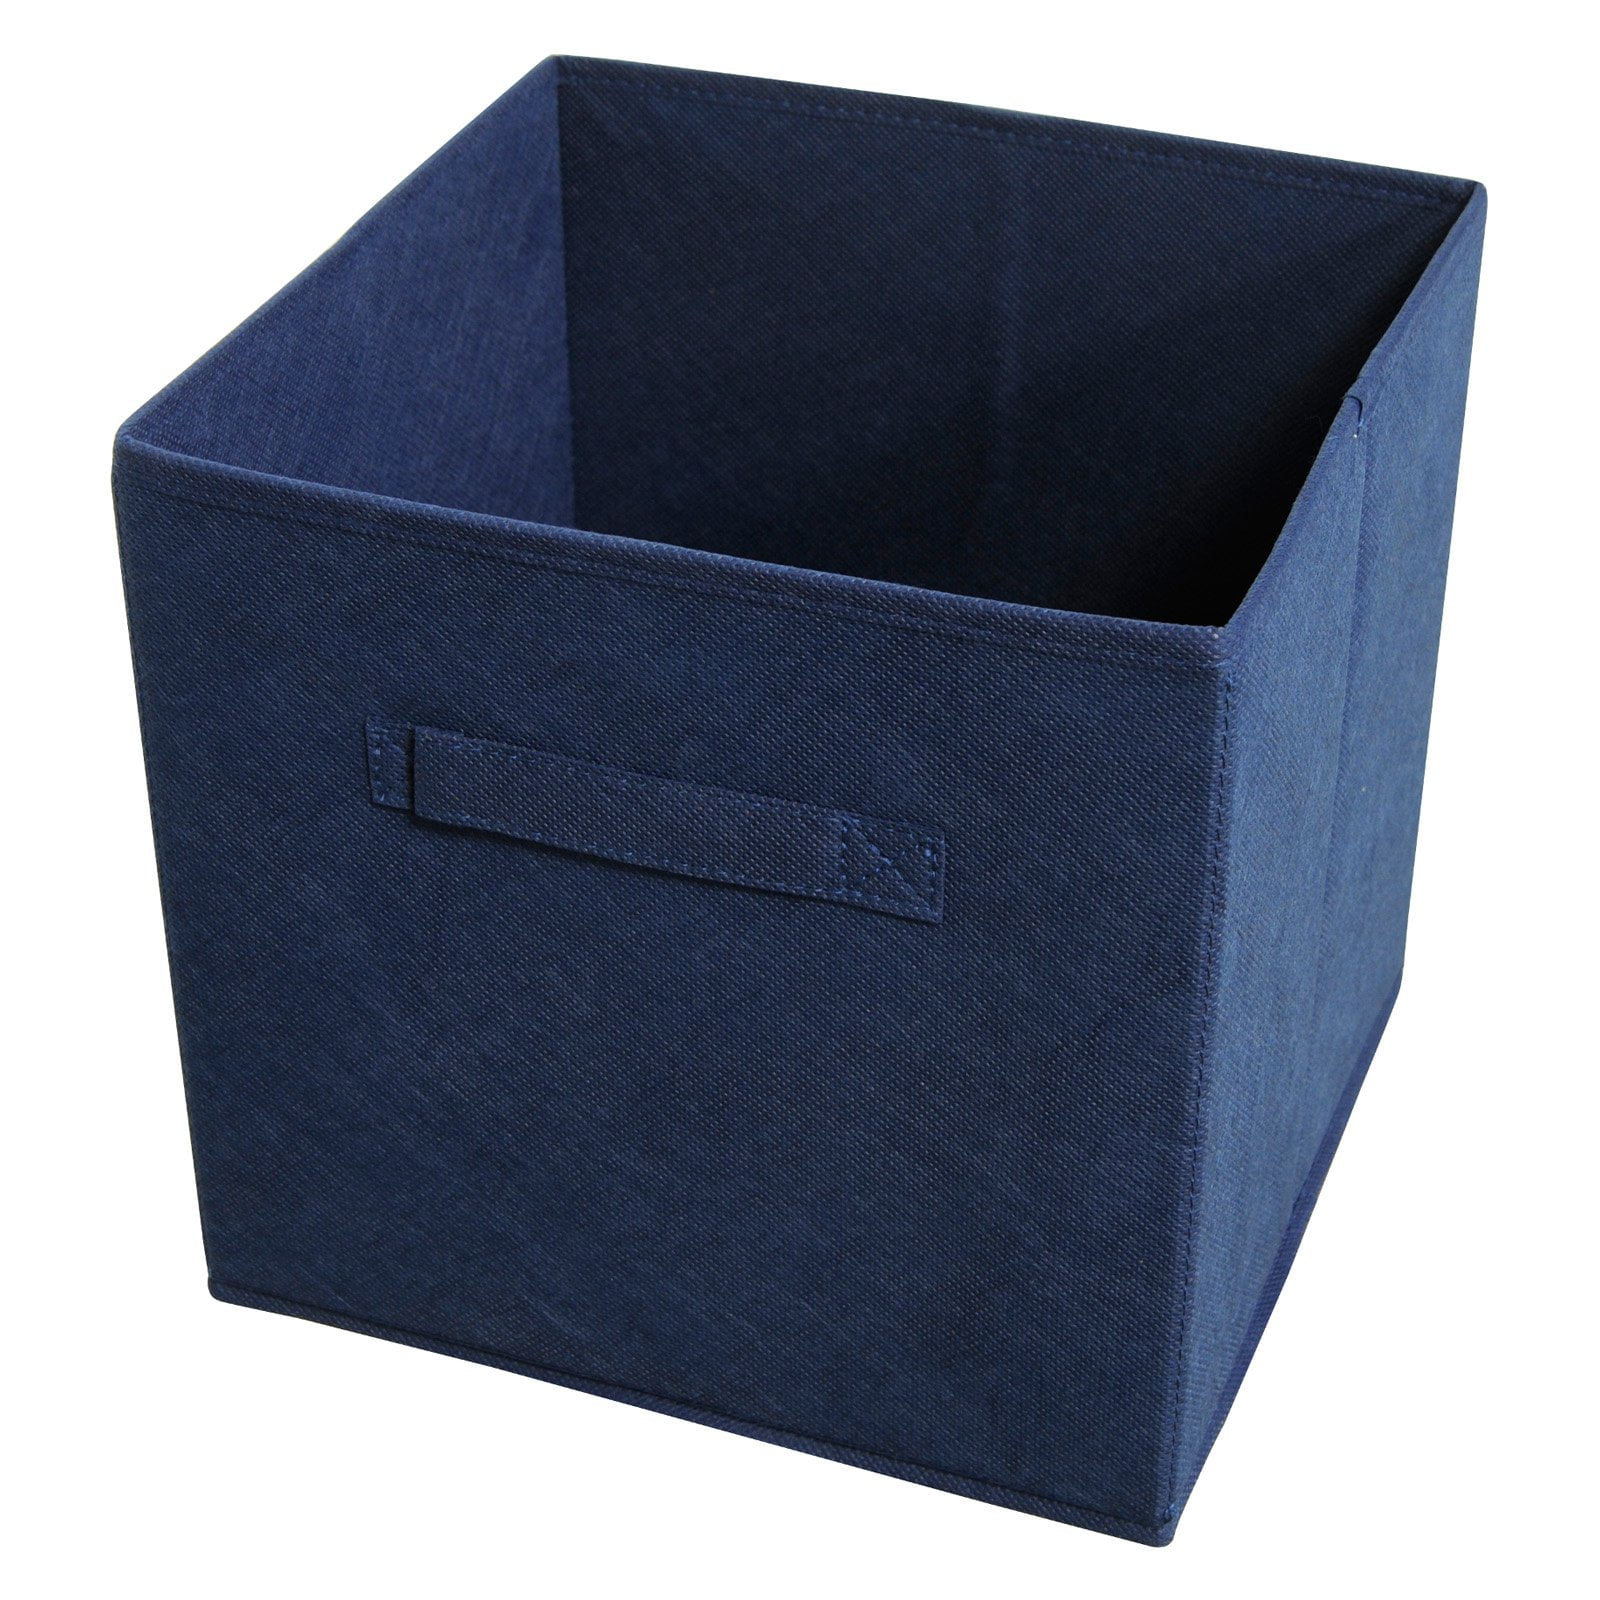 Avenal 4 Pack Folding Plastic Storage Bin Set Rebrilliant